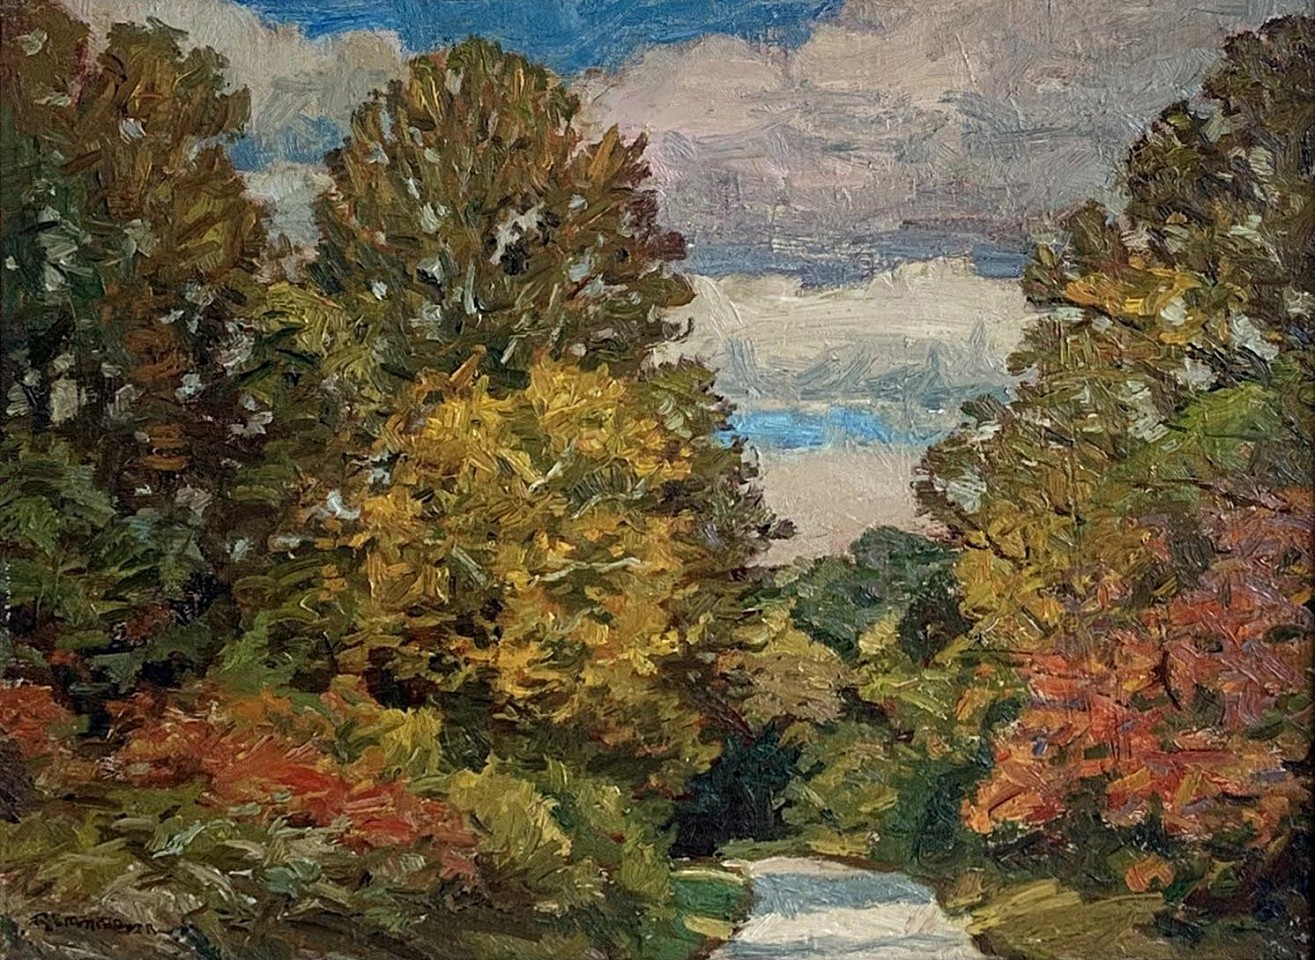 Robert Emmett Owen, Country Road in Shadow
oil on canvas, 16 x 20 in. (40.6 x 50.8 cm)
REO201001